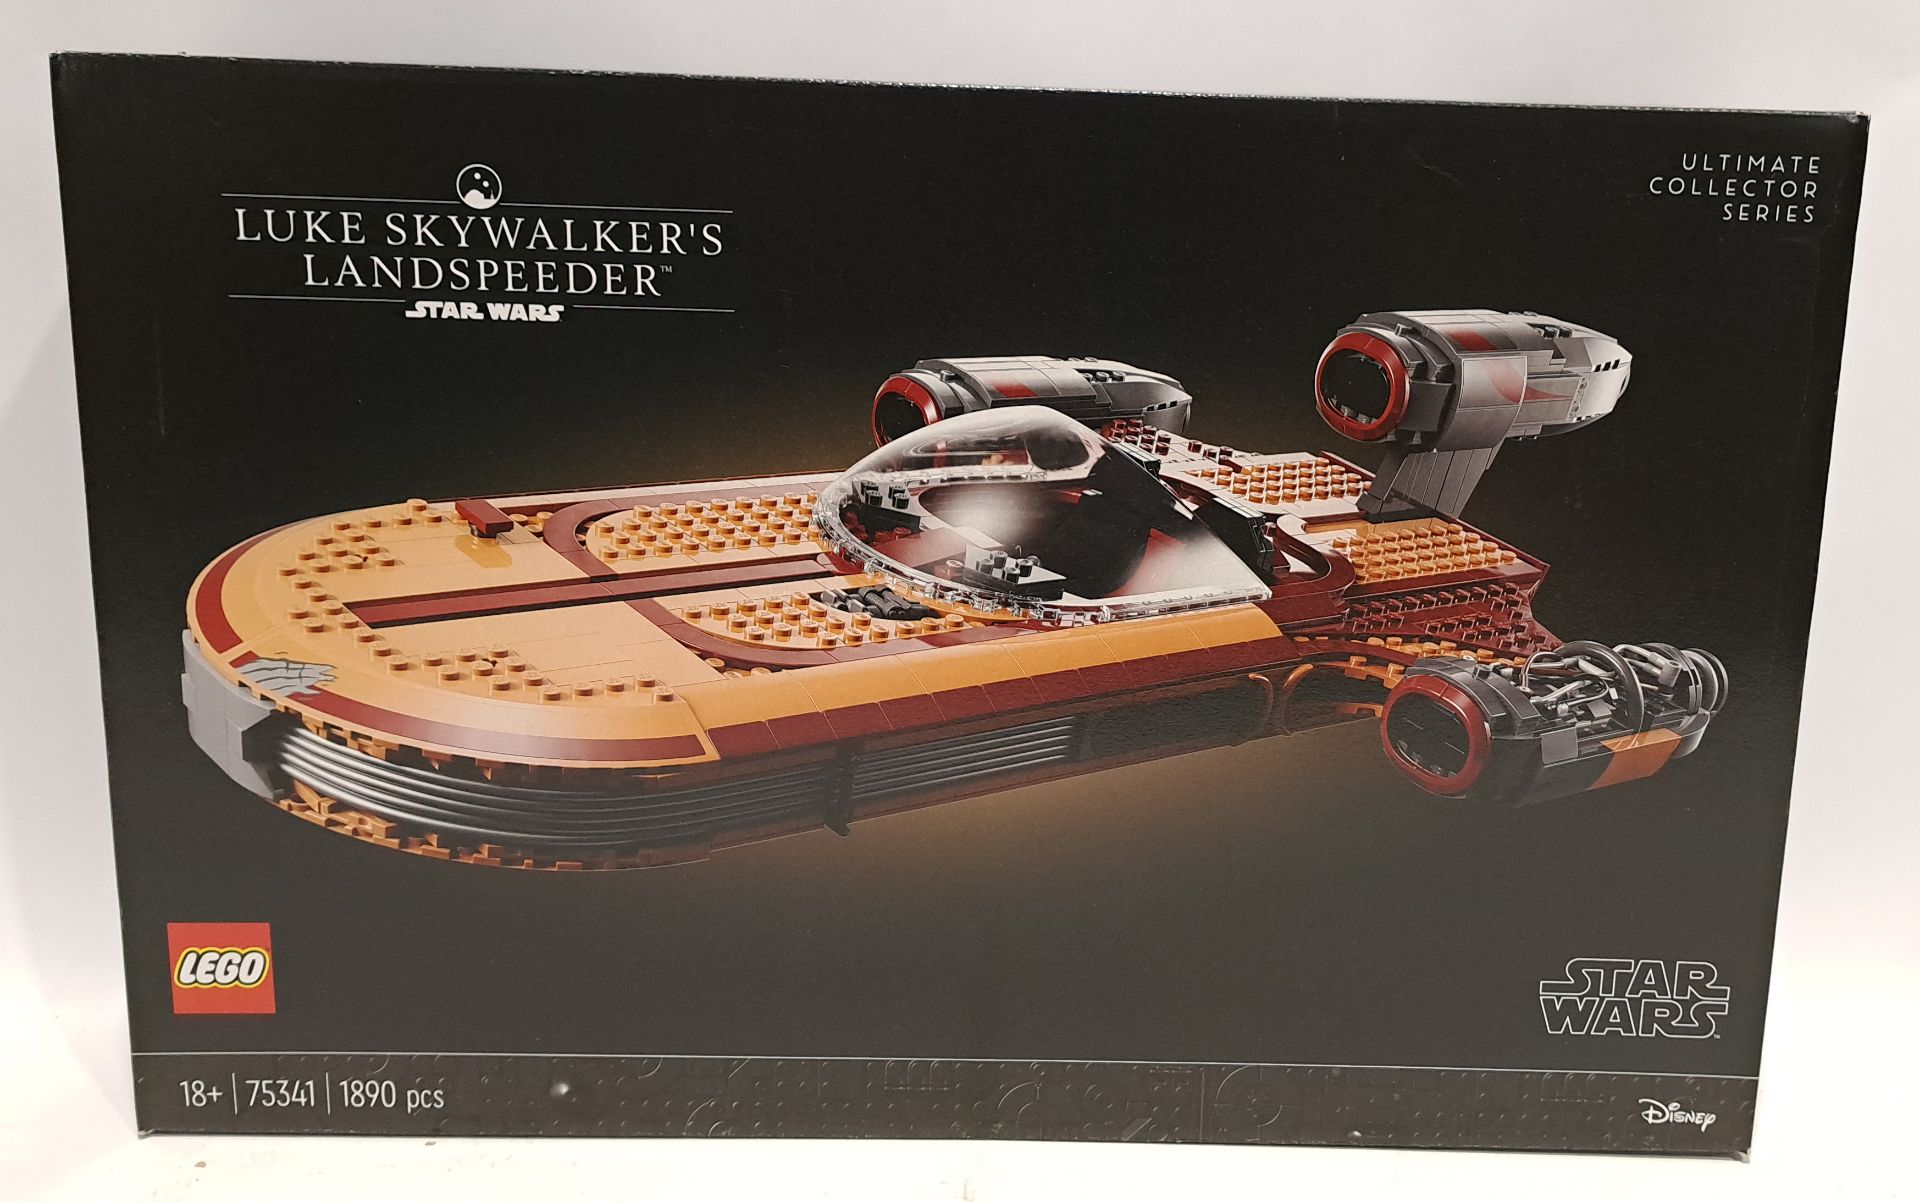 Lego Star Wars Luke Skywalker's Landspeeder set 75341